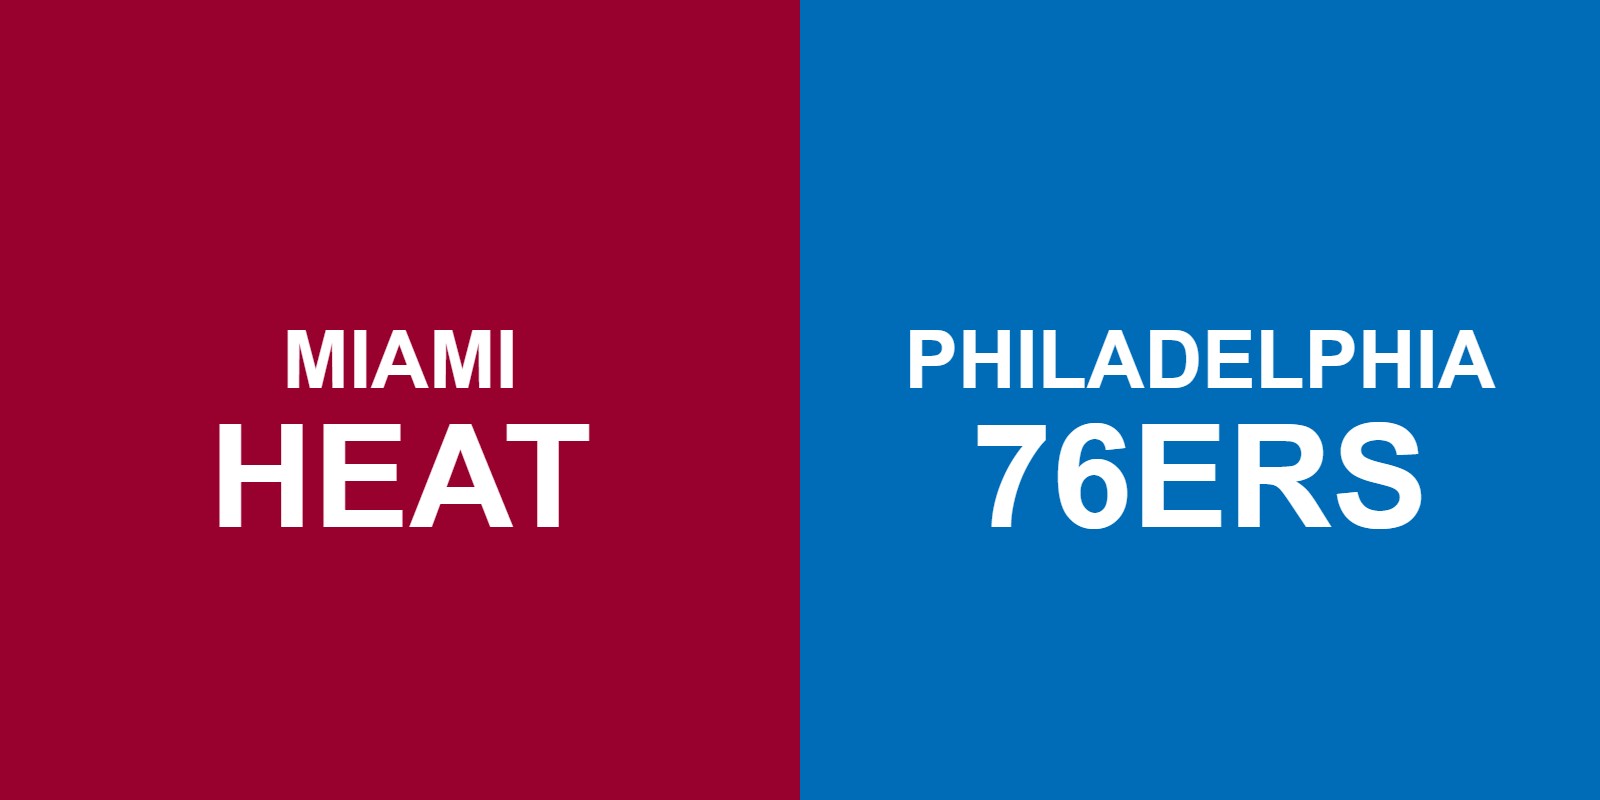 Heat vs 76ers